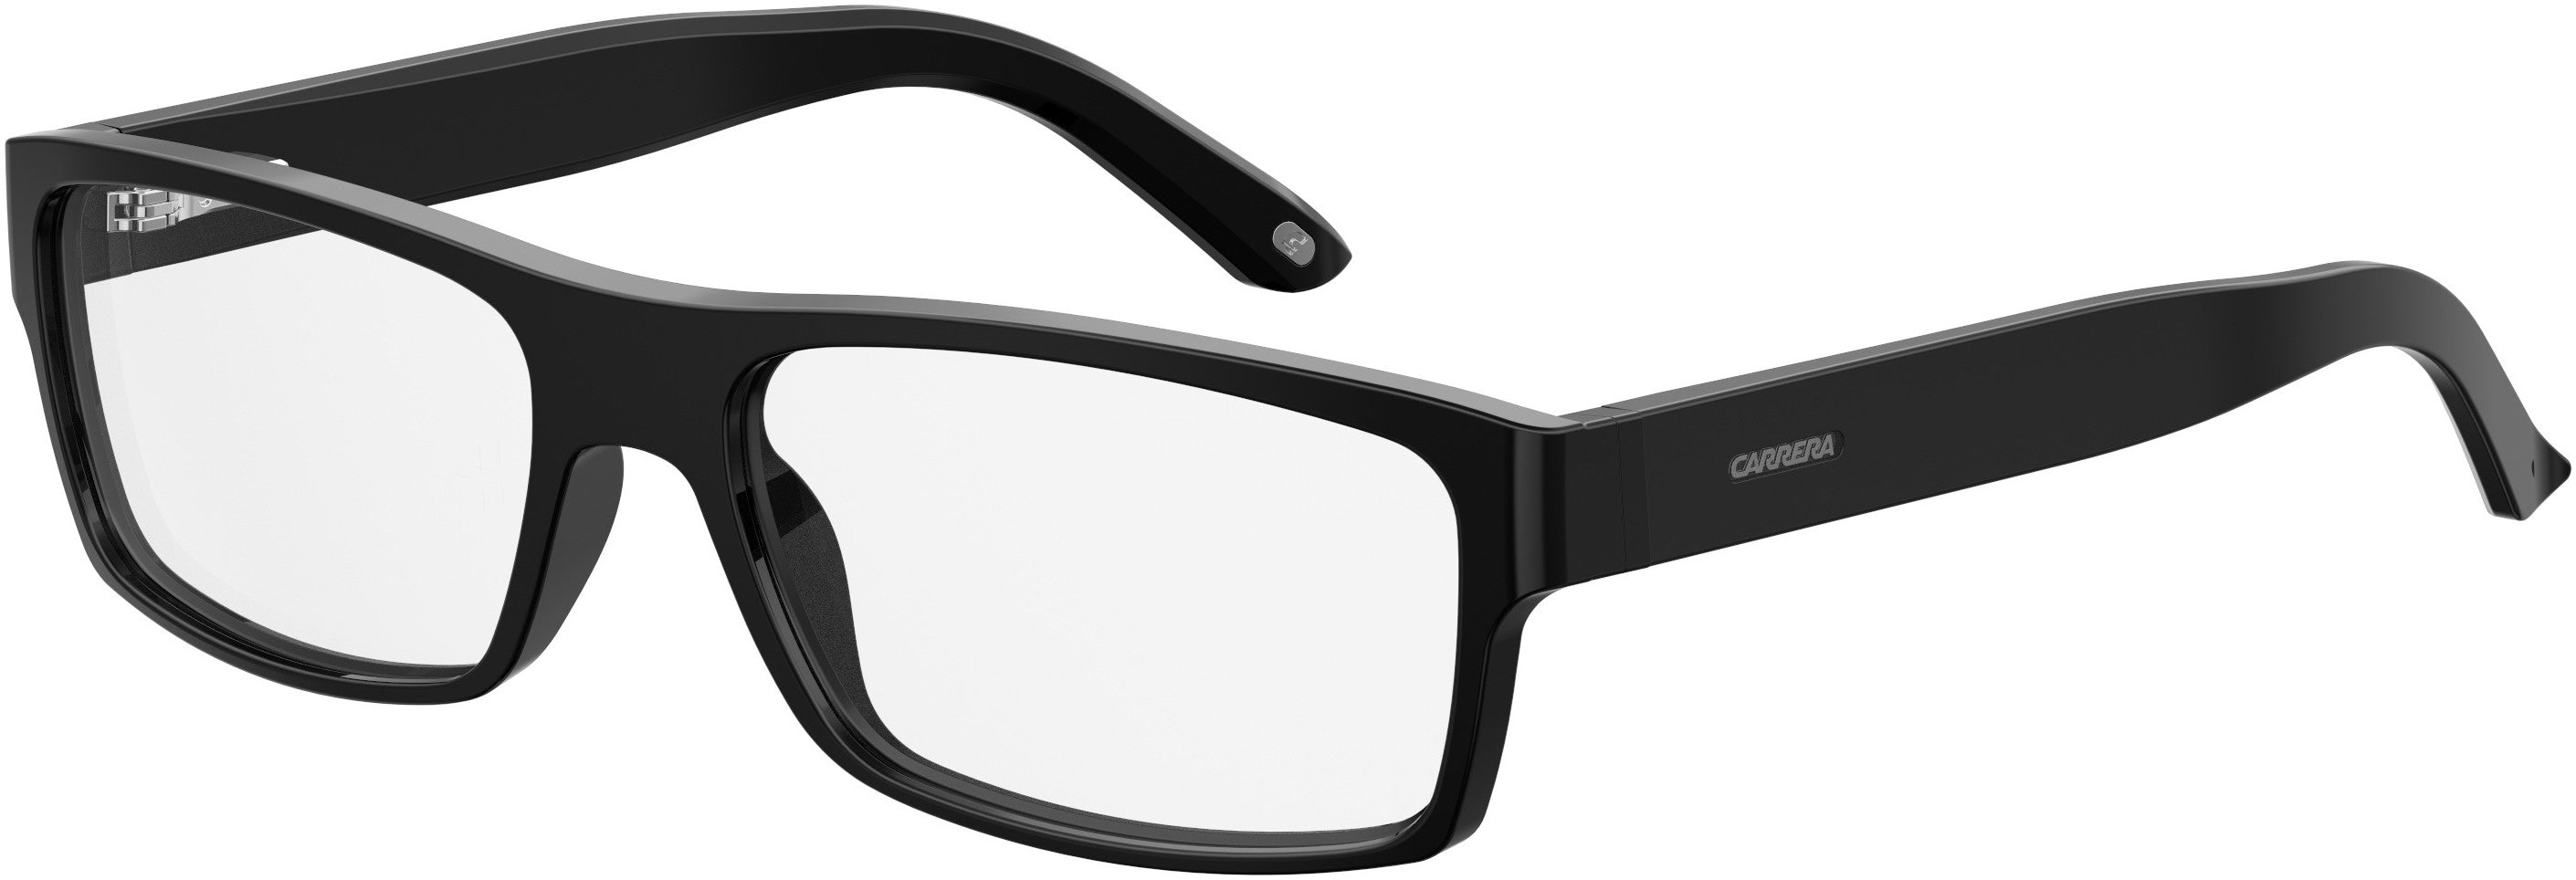  Carrera 6180 Rectangular Eyeglasses 0807-0807  Black (00 Demo Lens)